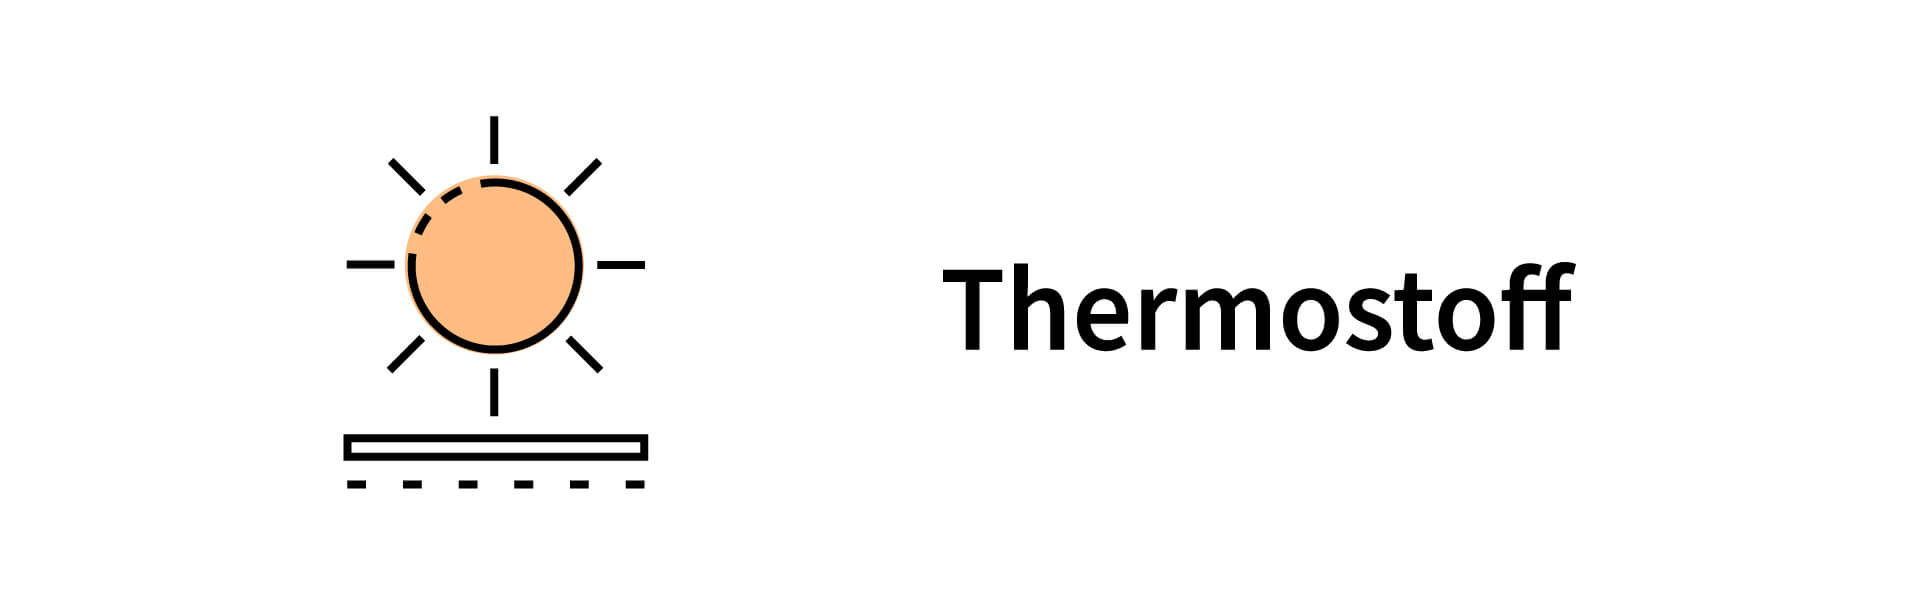 Thermostoff